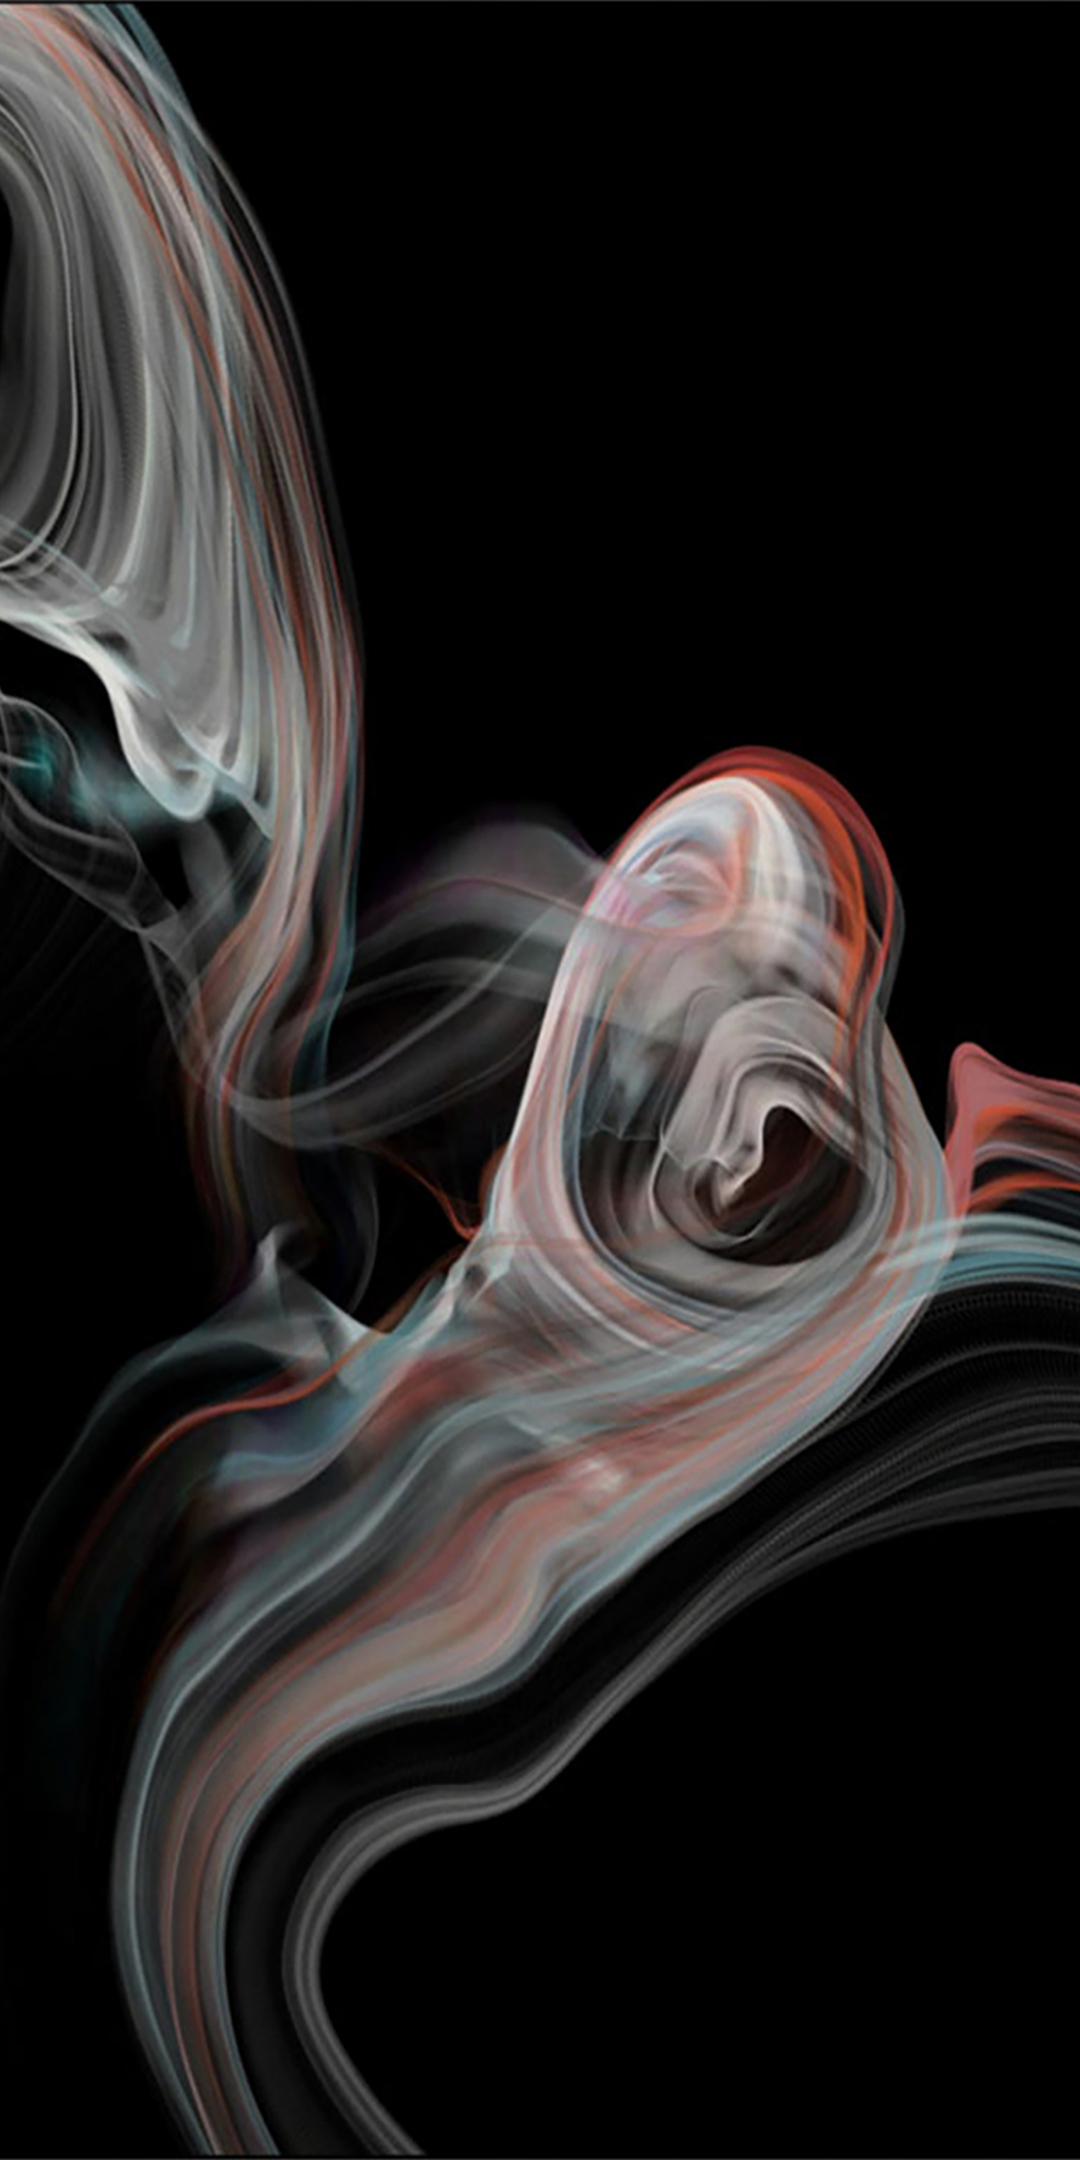 iMac Pro, stock, smoke, abstract, dark, 1080x2160 wallpaper